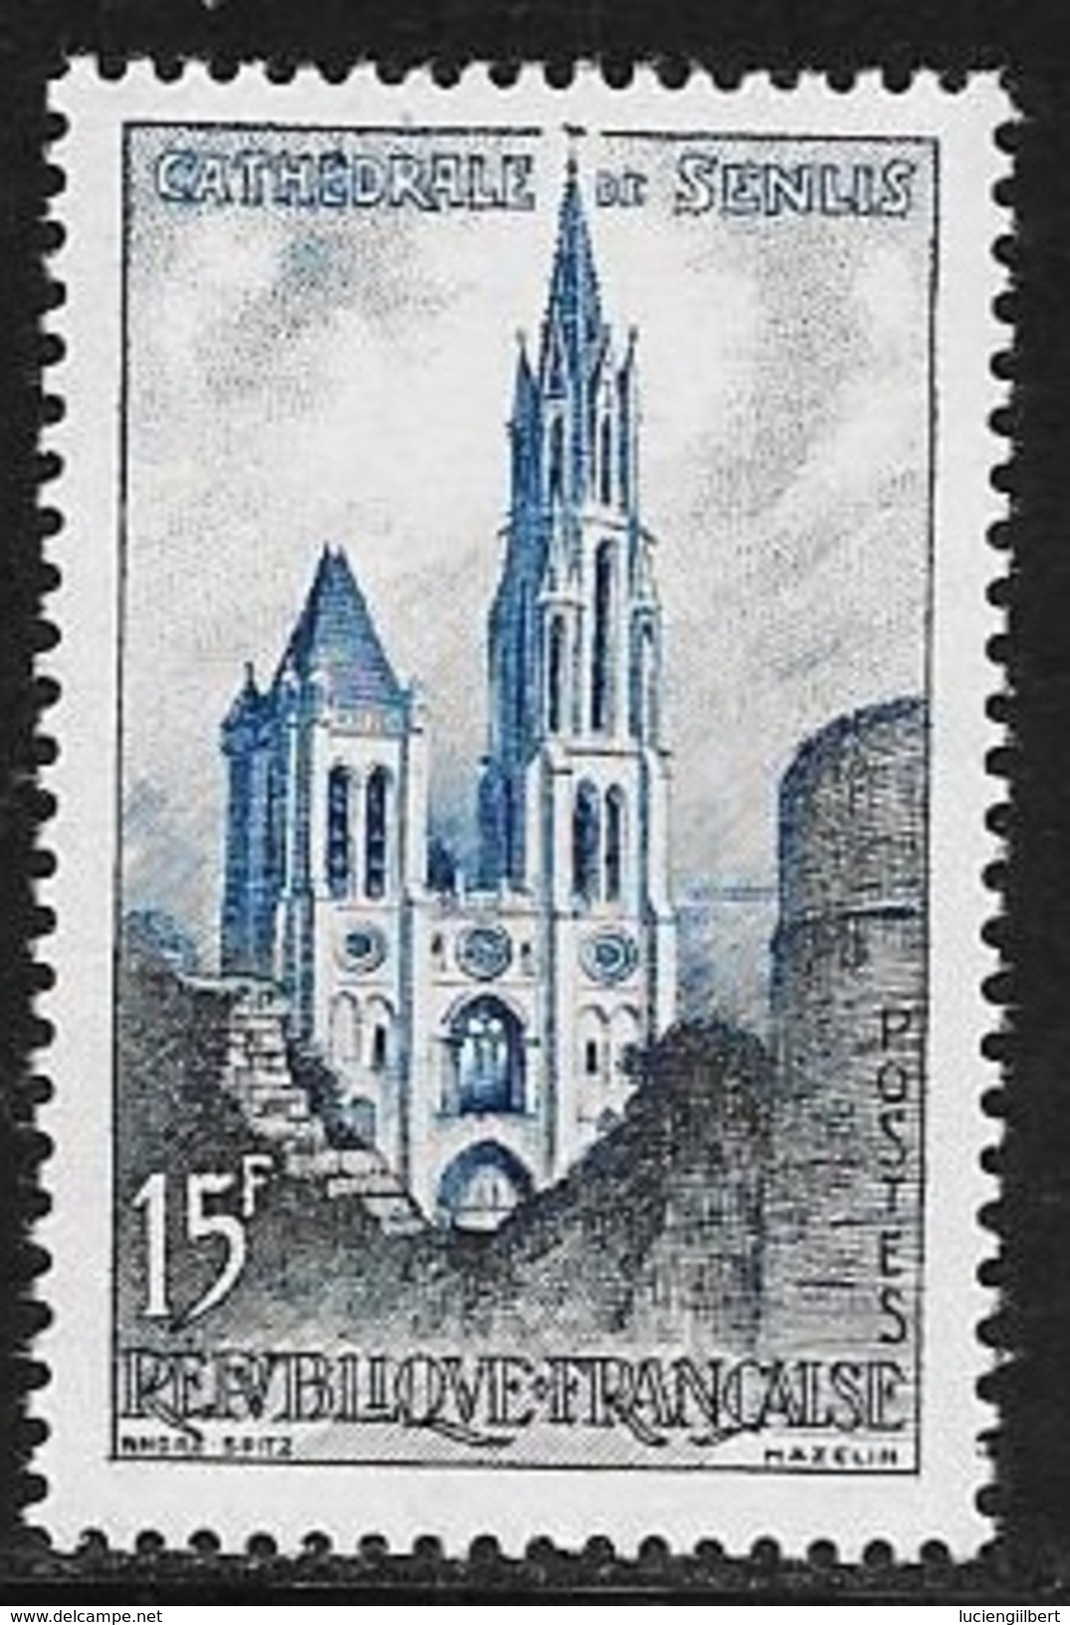 N° 1165   FRANCE  - NEUF  -  CATHEDRALE DE SENLIS -  1958 - Nuovi